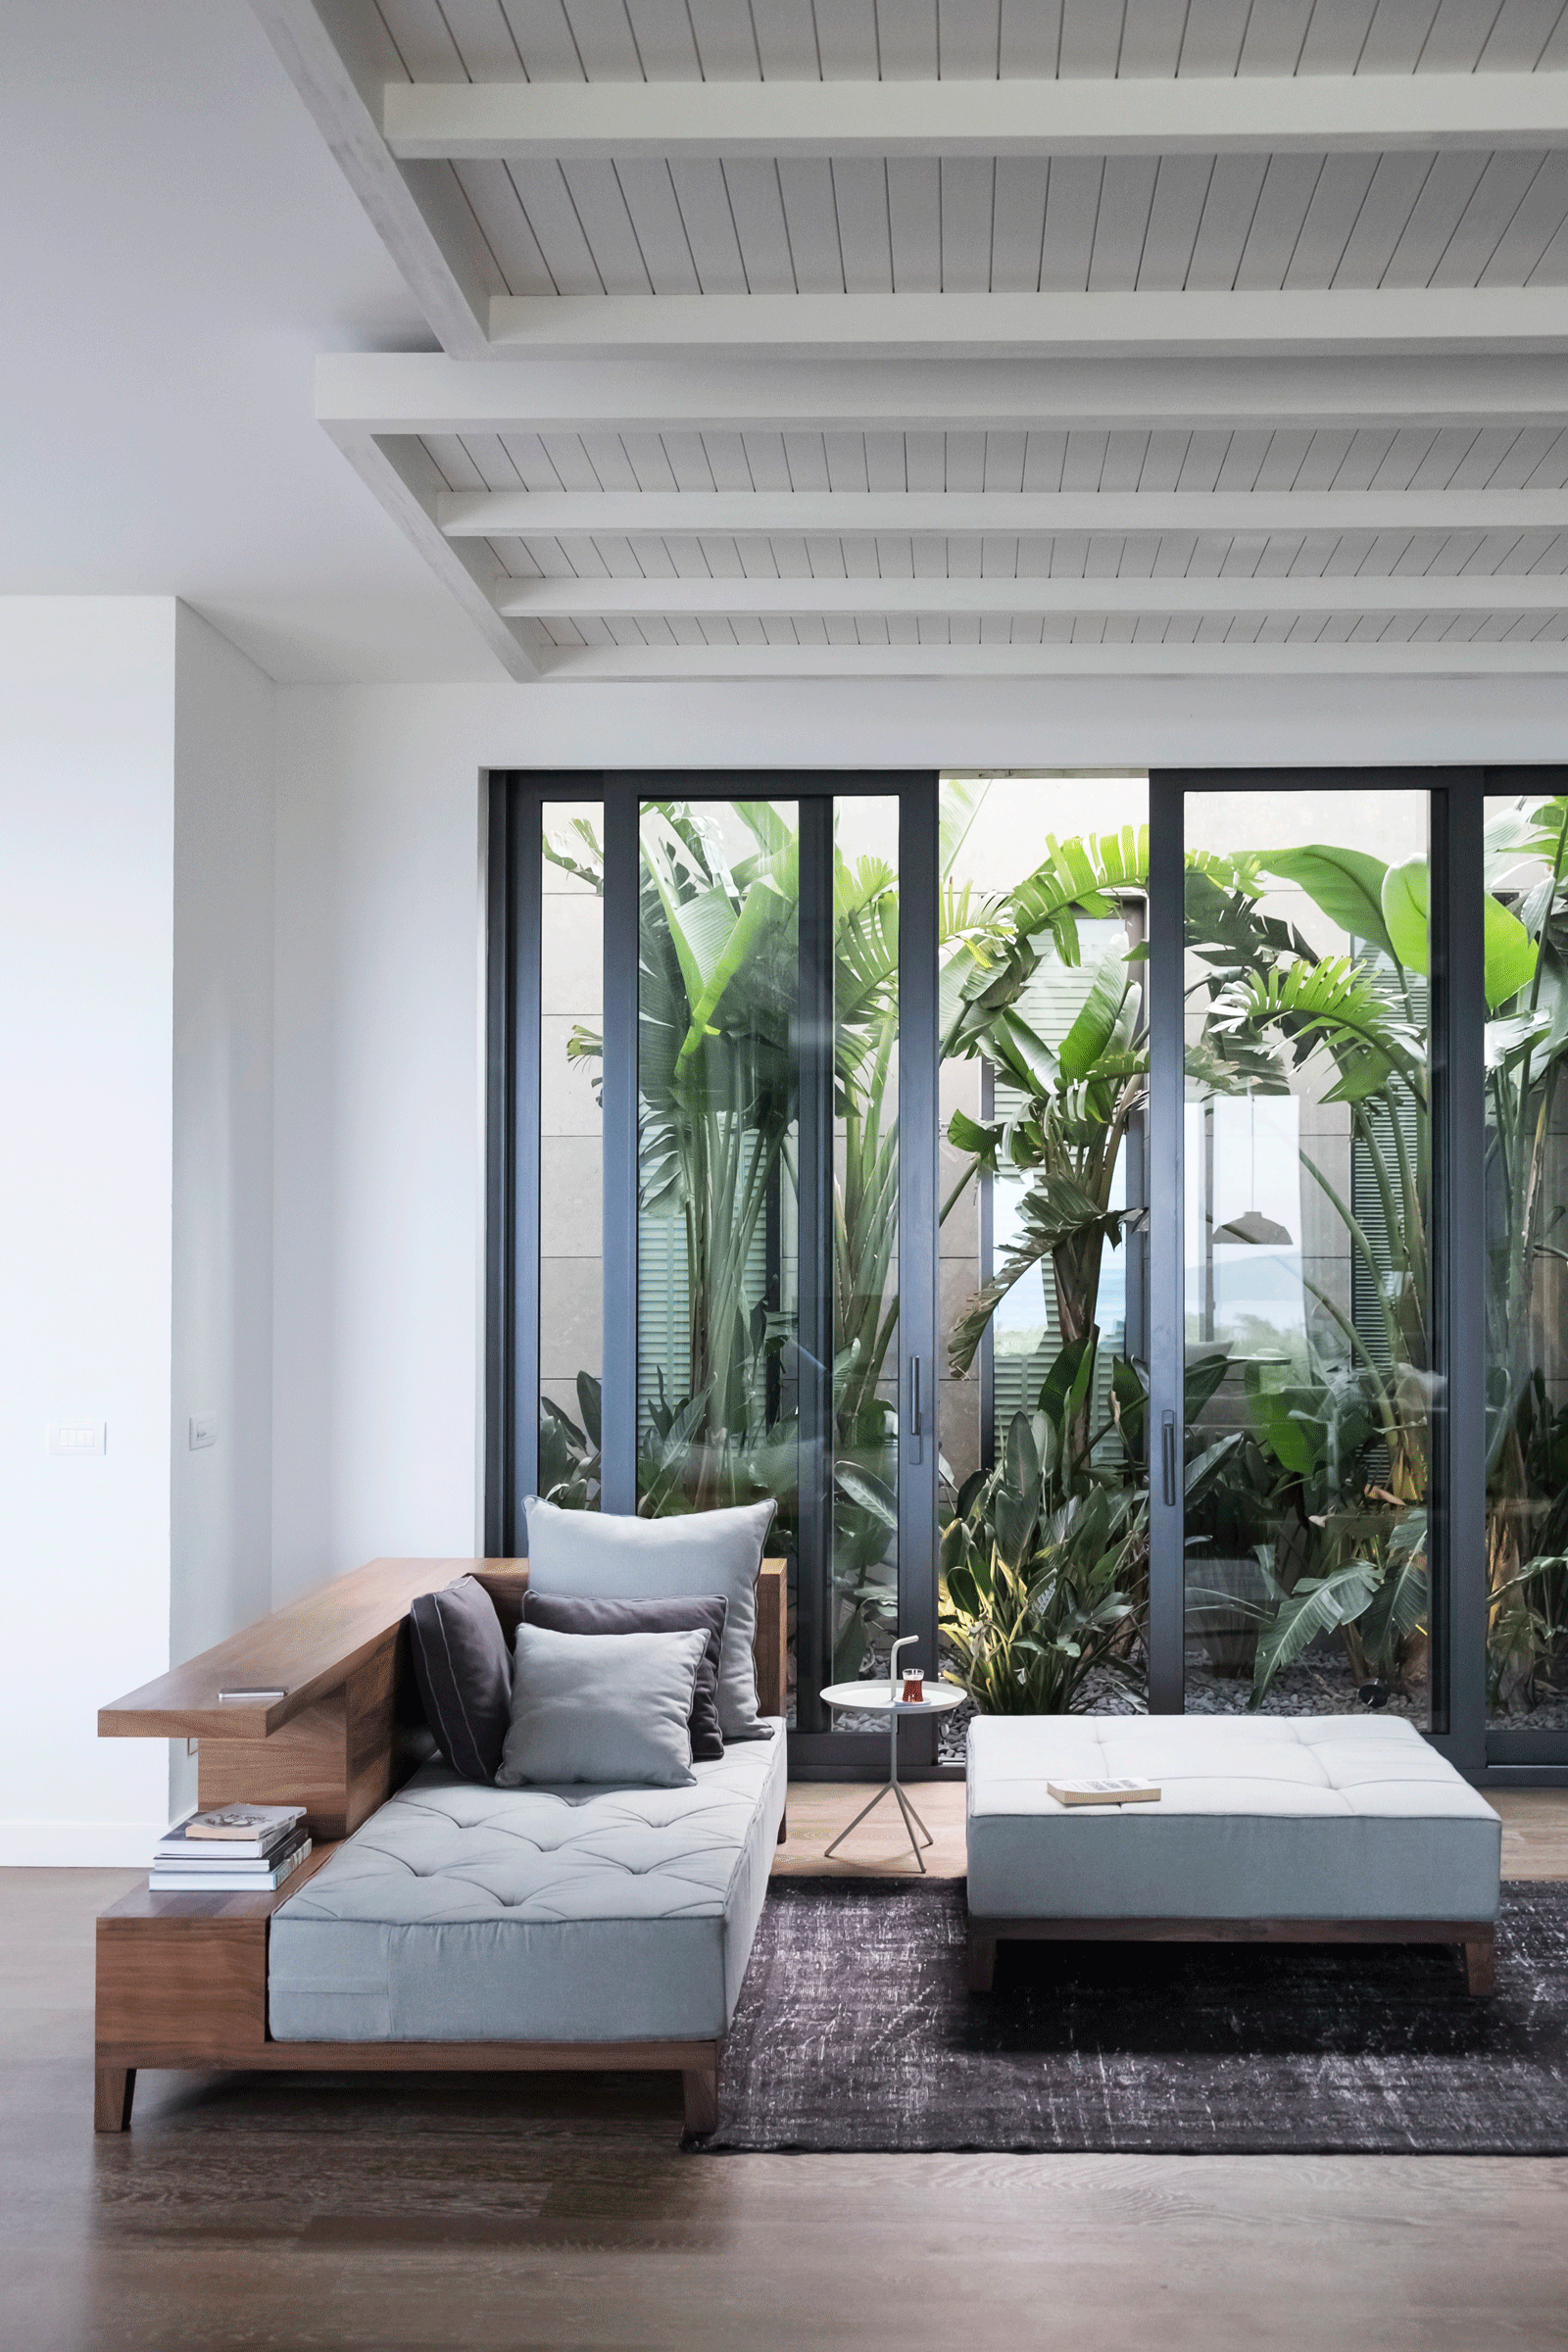 internal courtyard with lush palms